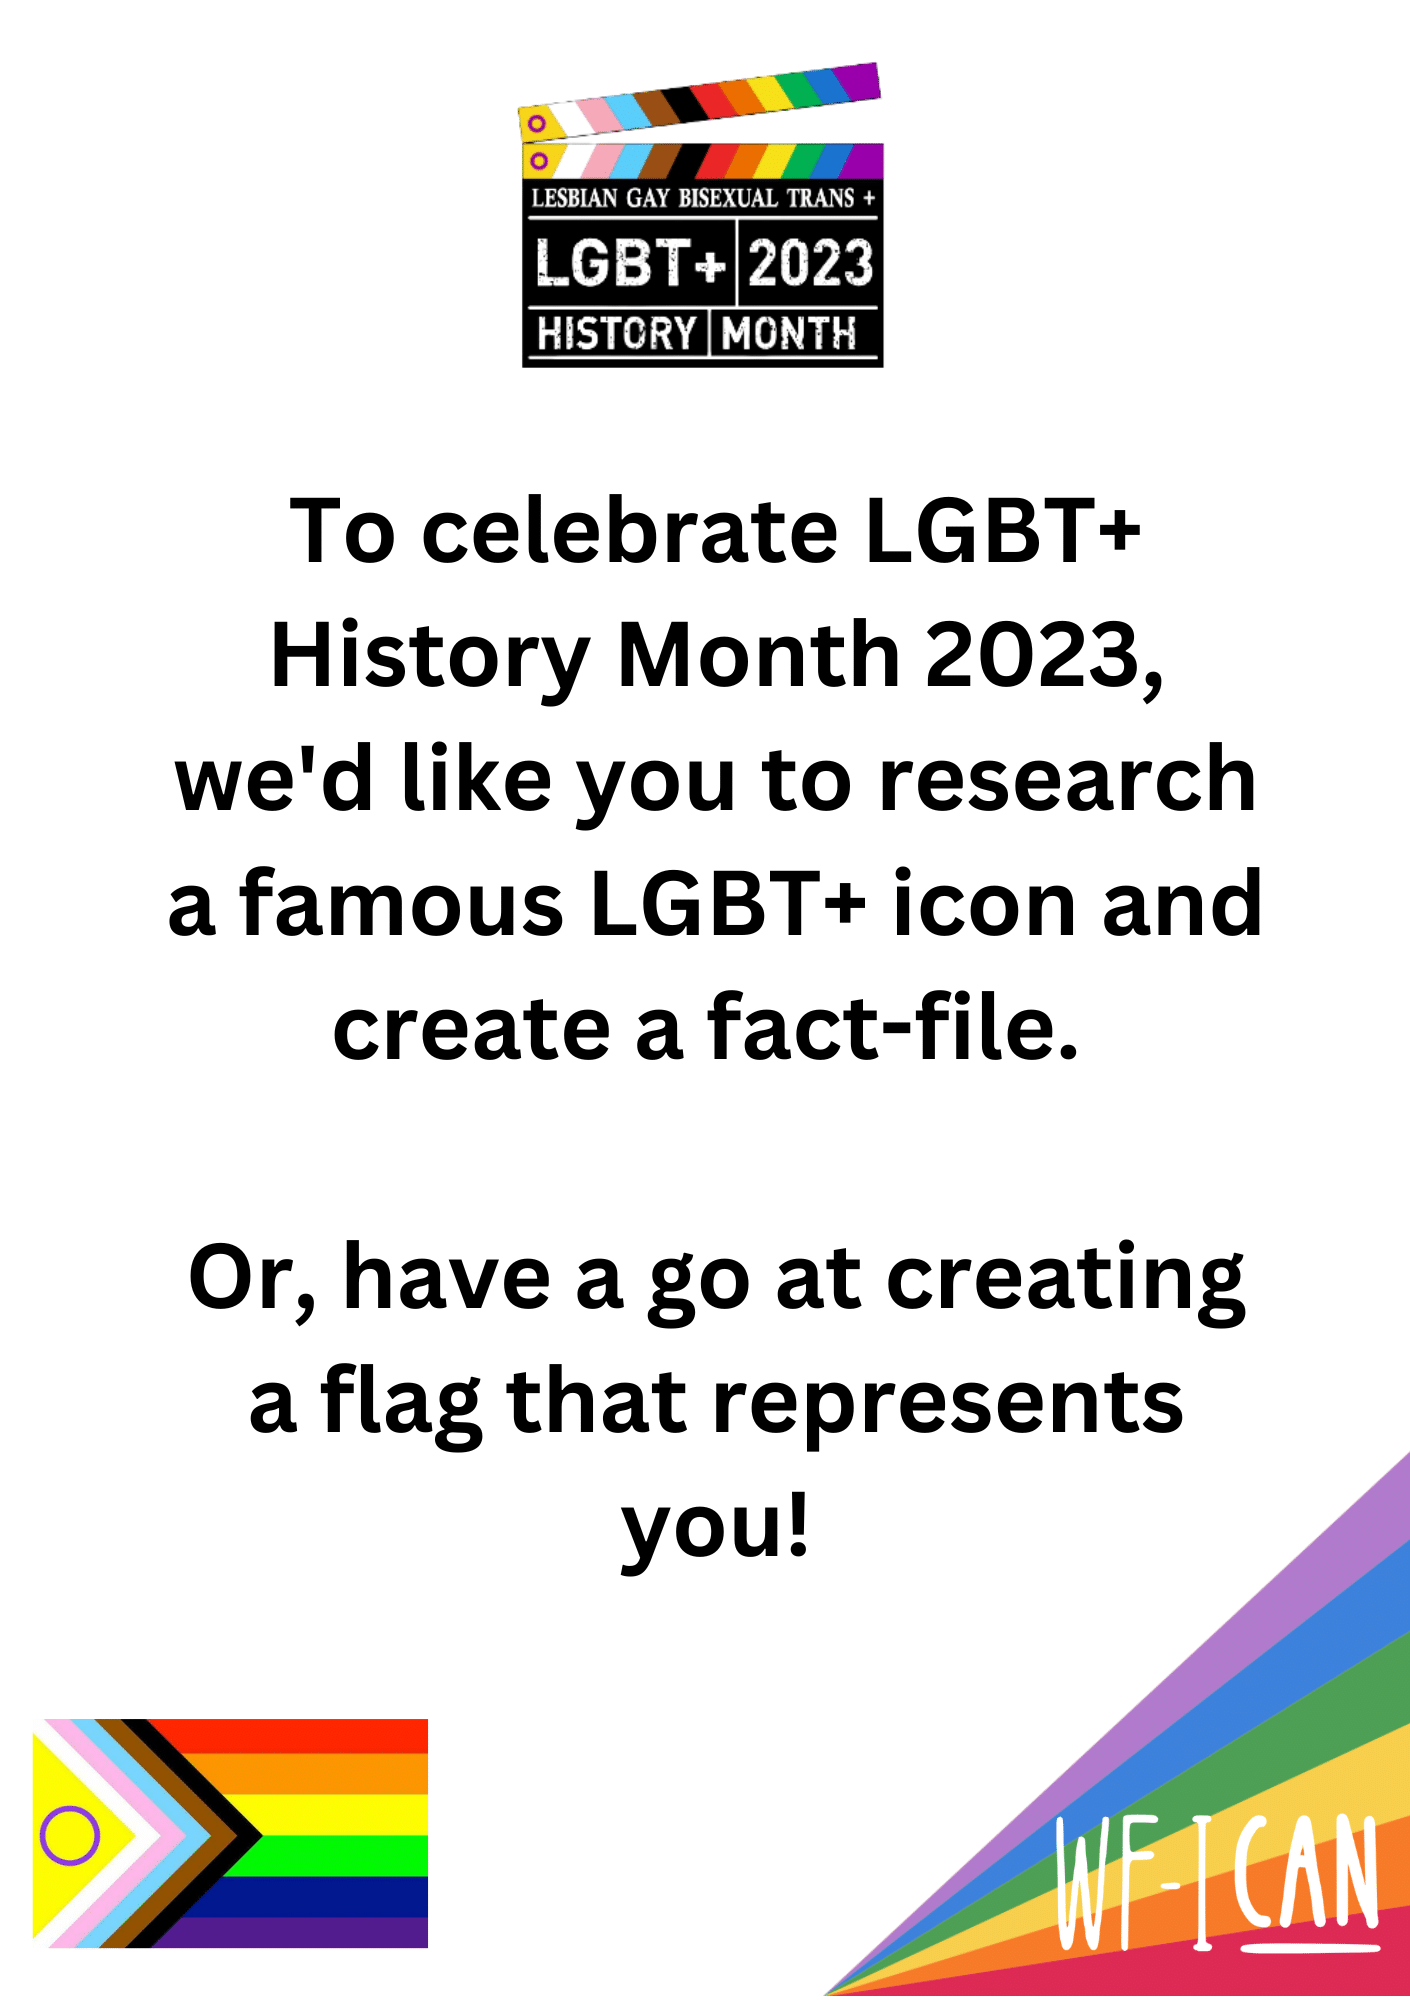 LGBT+ History Month challenge